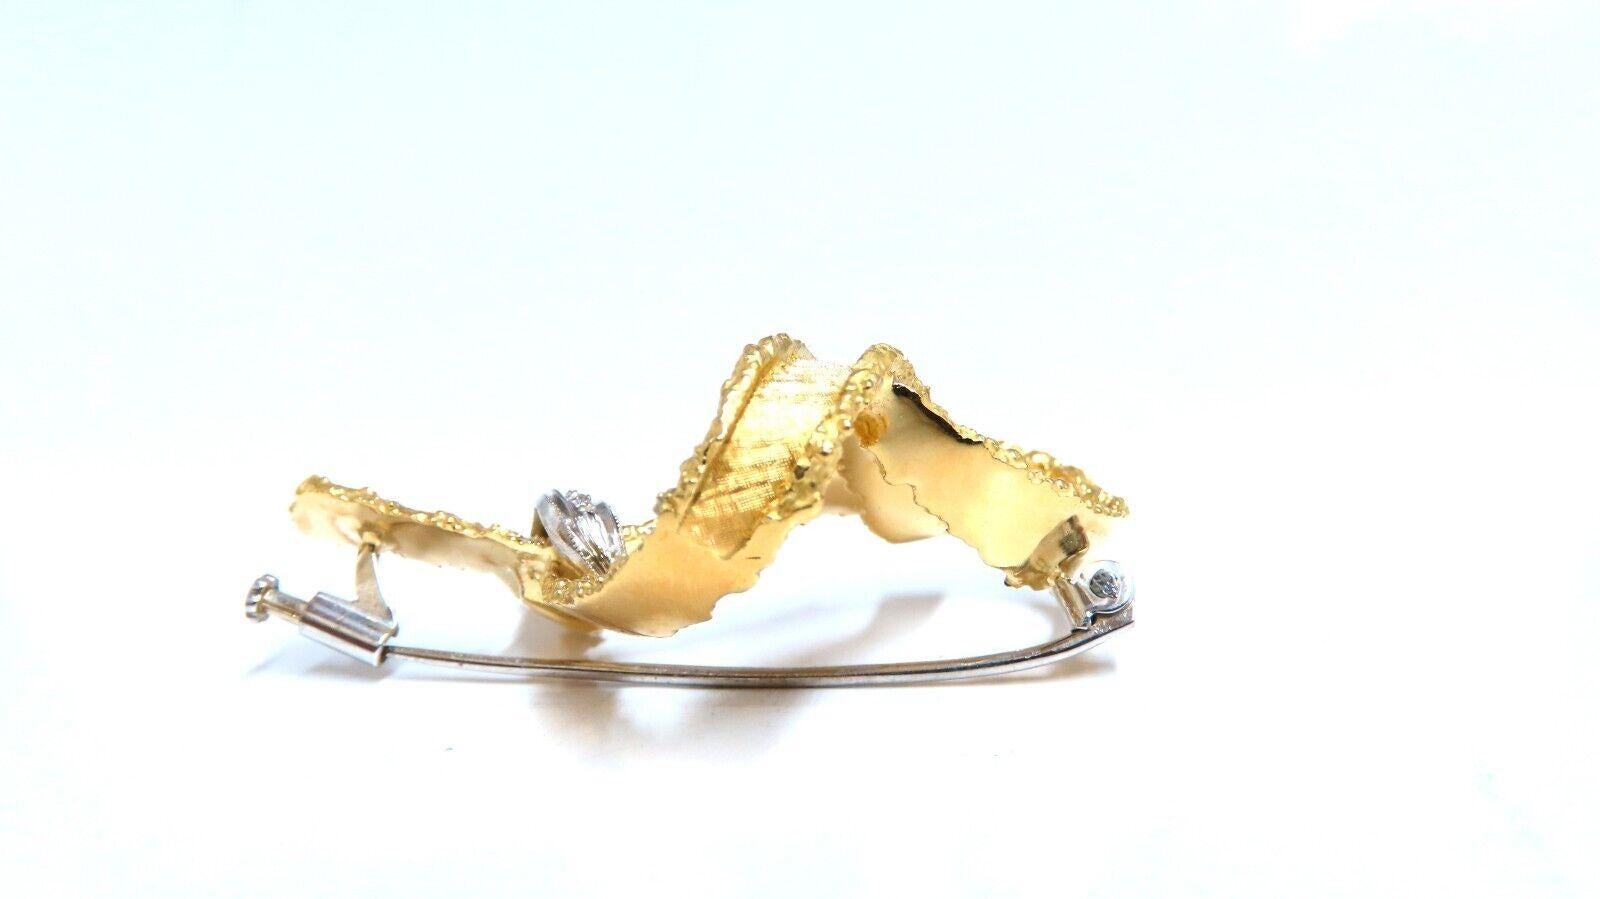 Peace iconic ribbon ribbon pin

Natural round diamonds, g color vs2 clarity

18 karat yellow gold

12.6 g

50 mm x 31 mm